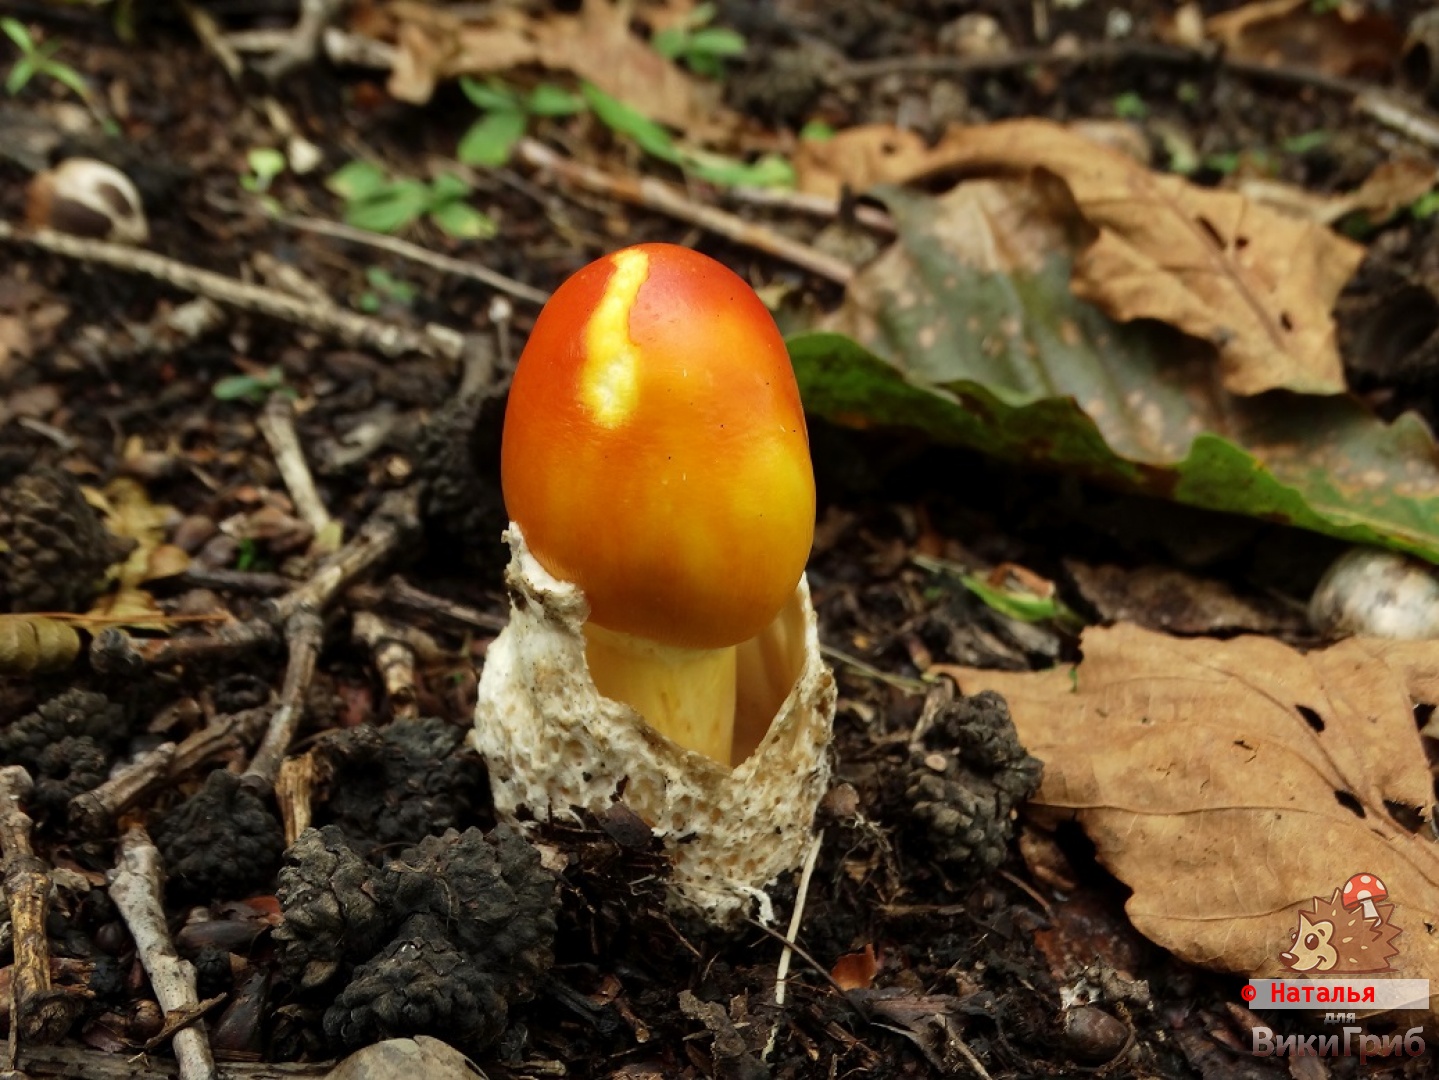 cezarskij grib dalnevostochnyj amanita caesareoides 603951b86deae - Цезарский гриб дальневосточный (Amanita caesareoides)